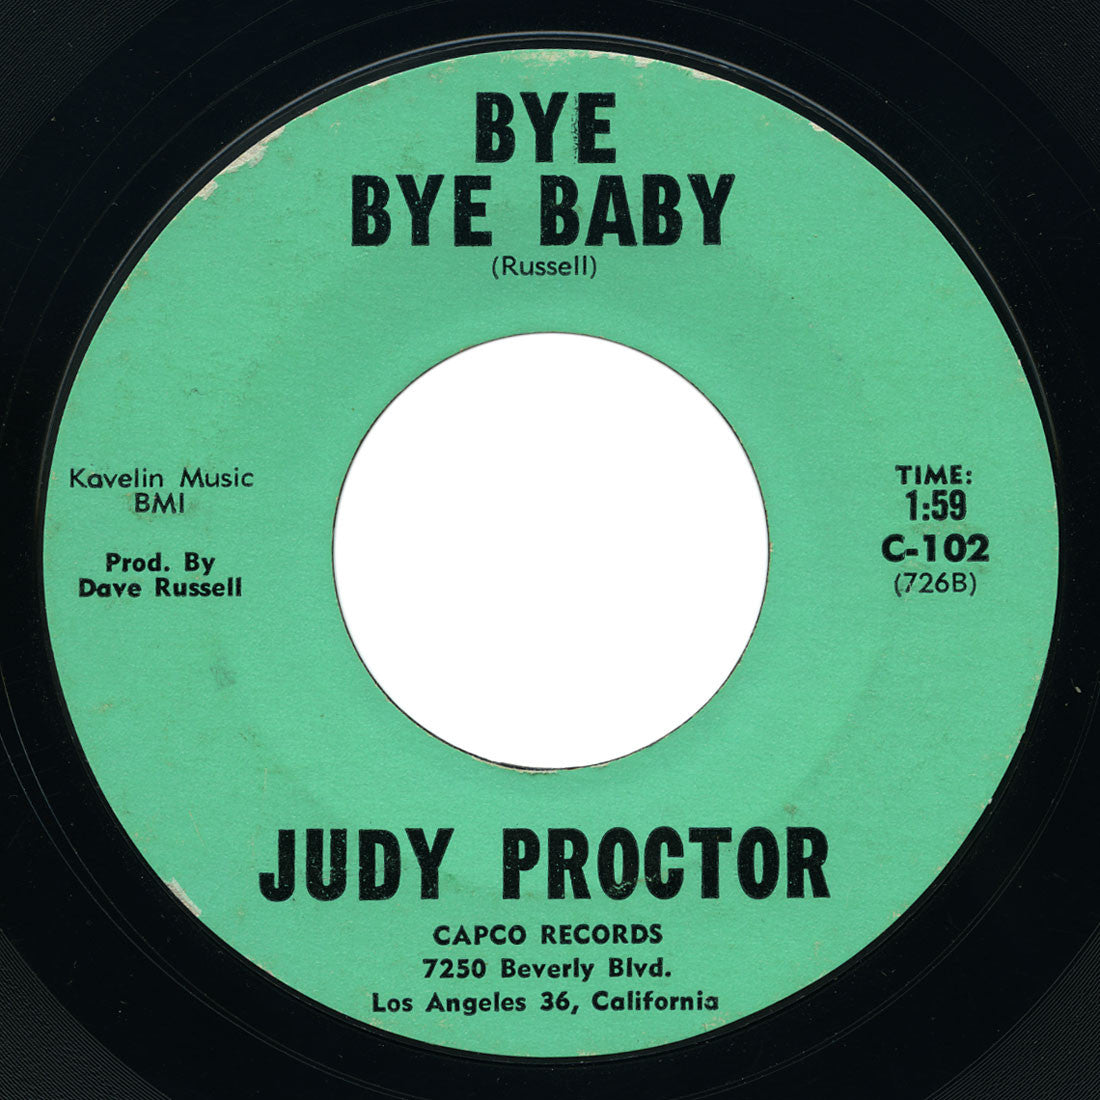 Judy Proctor - Storm In My Heart / Bye Bye Baby - Capco